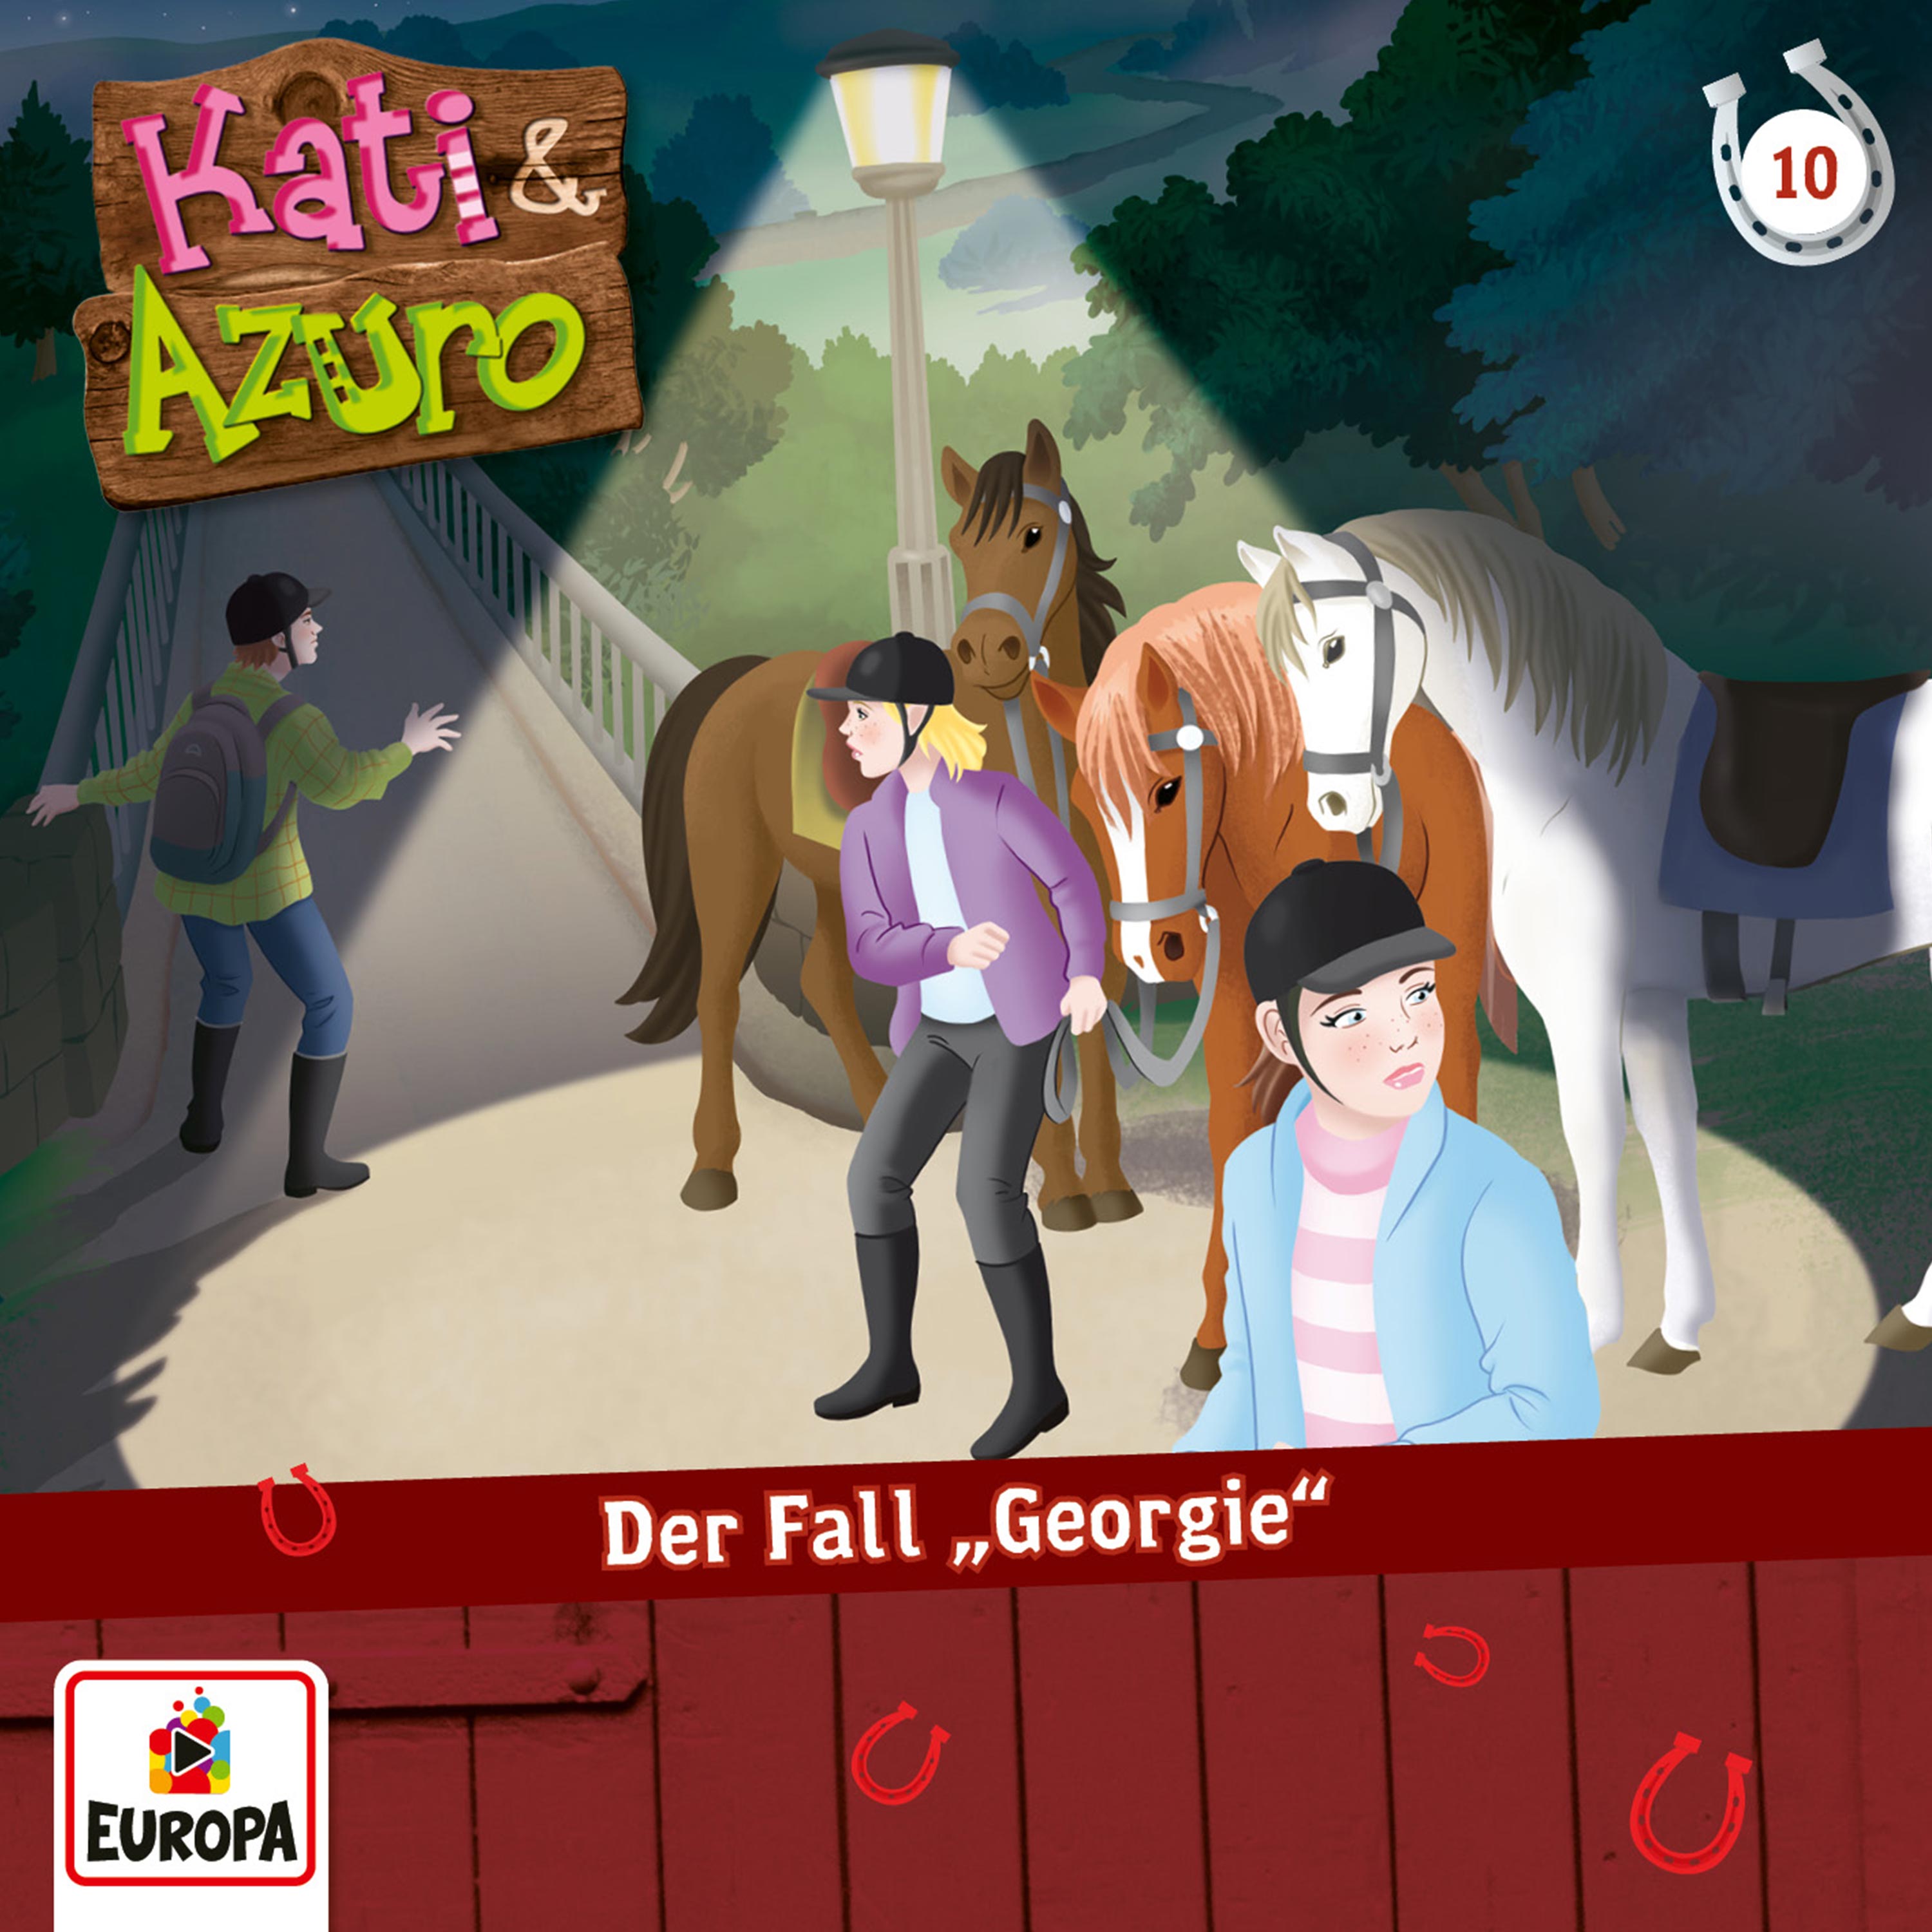 Kati & Azuro: Der Fall "Georgie"